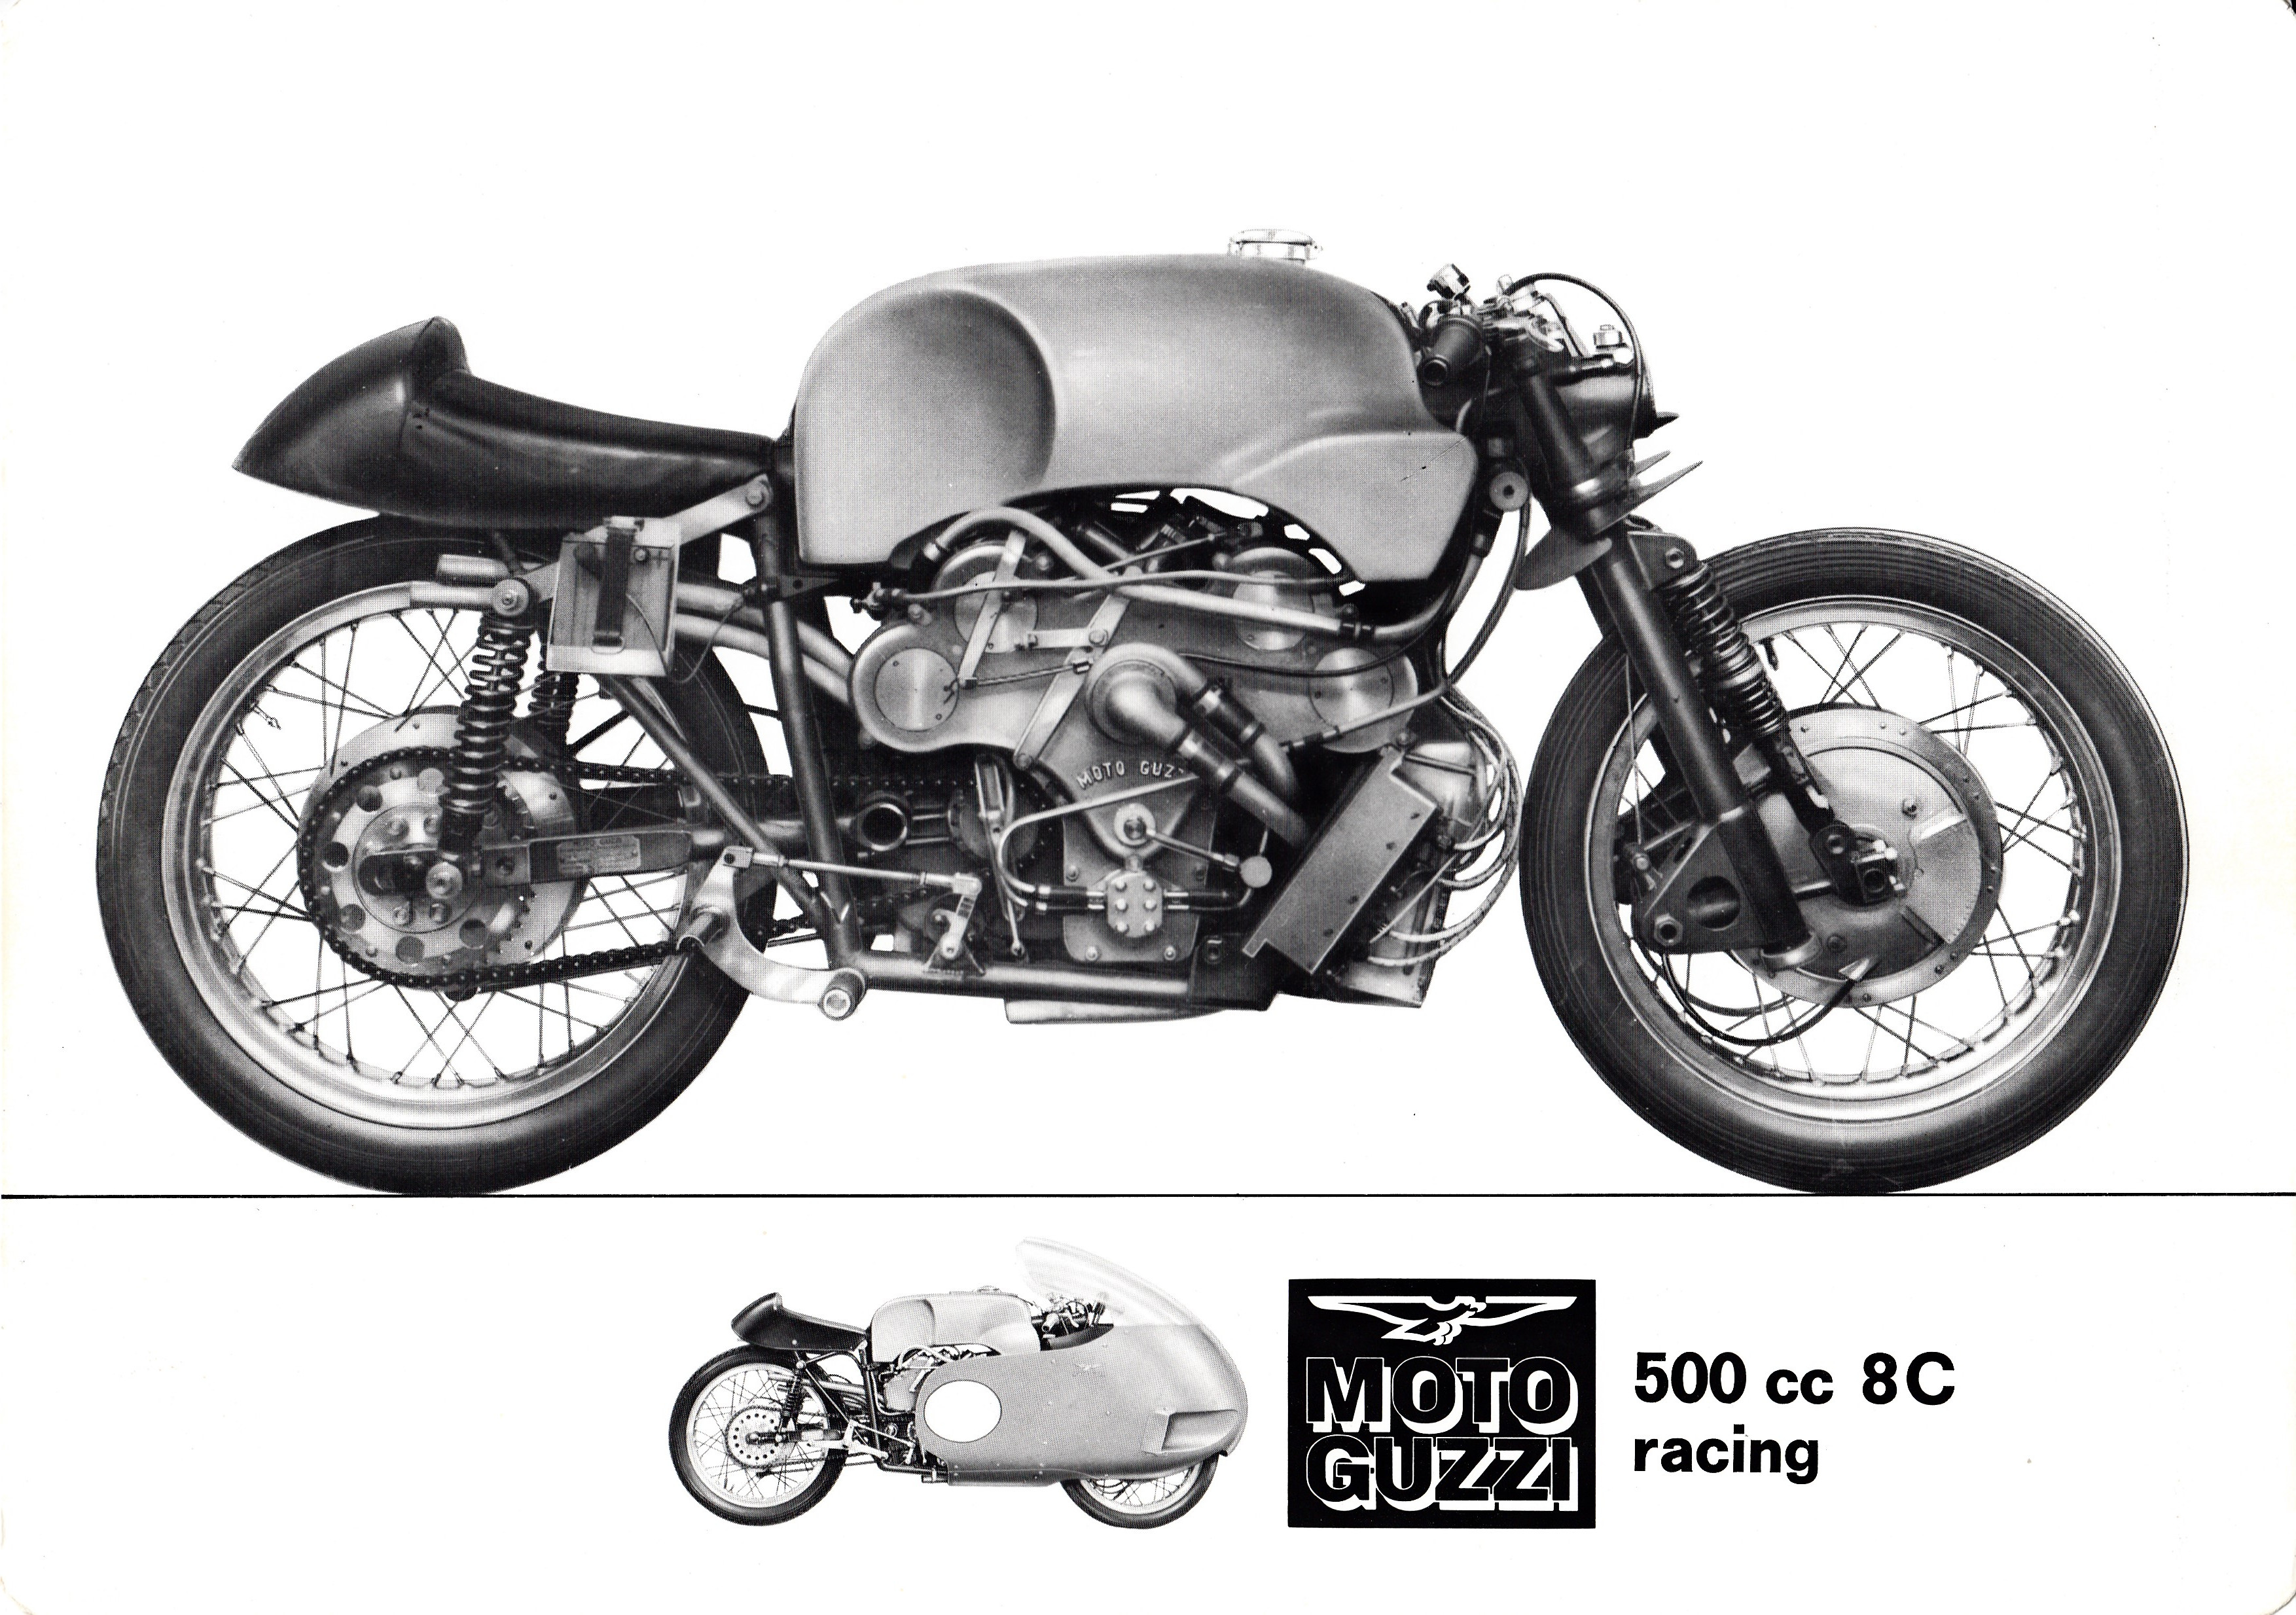 Brochure - Moto Guzzi 500 cc 8 cylinder racing